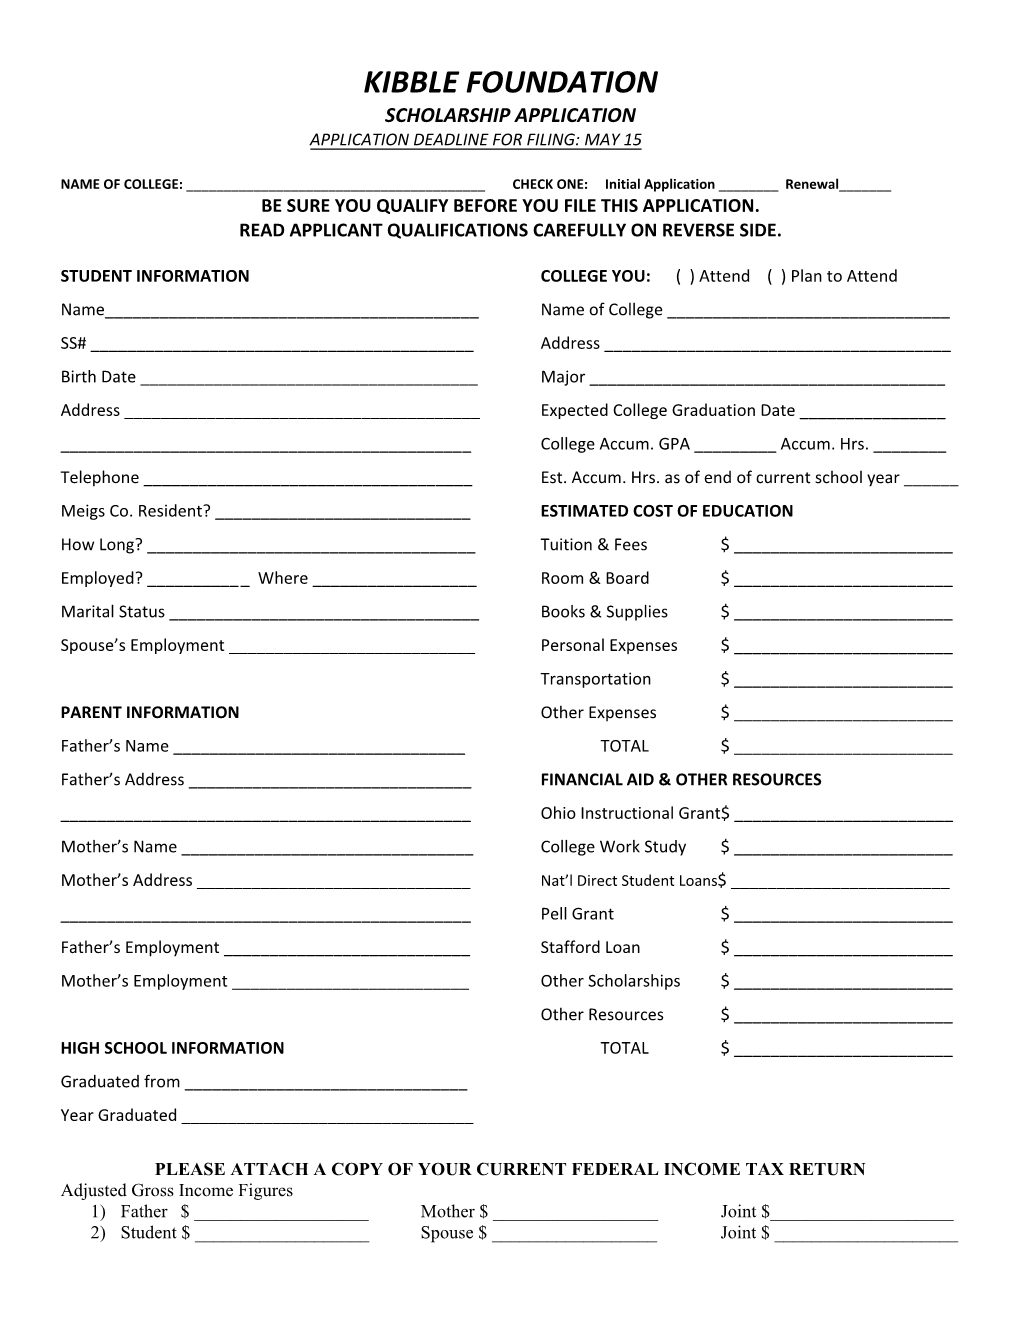 Kibble Foundation Scholarship Application Application Deadline for Filing: May 15